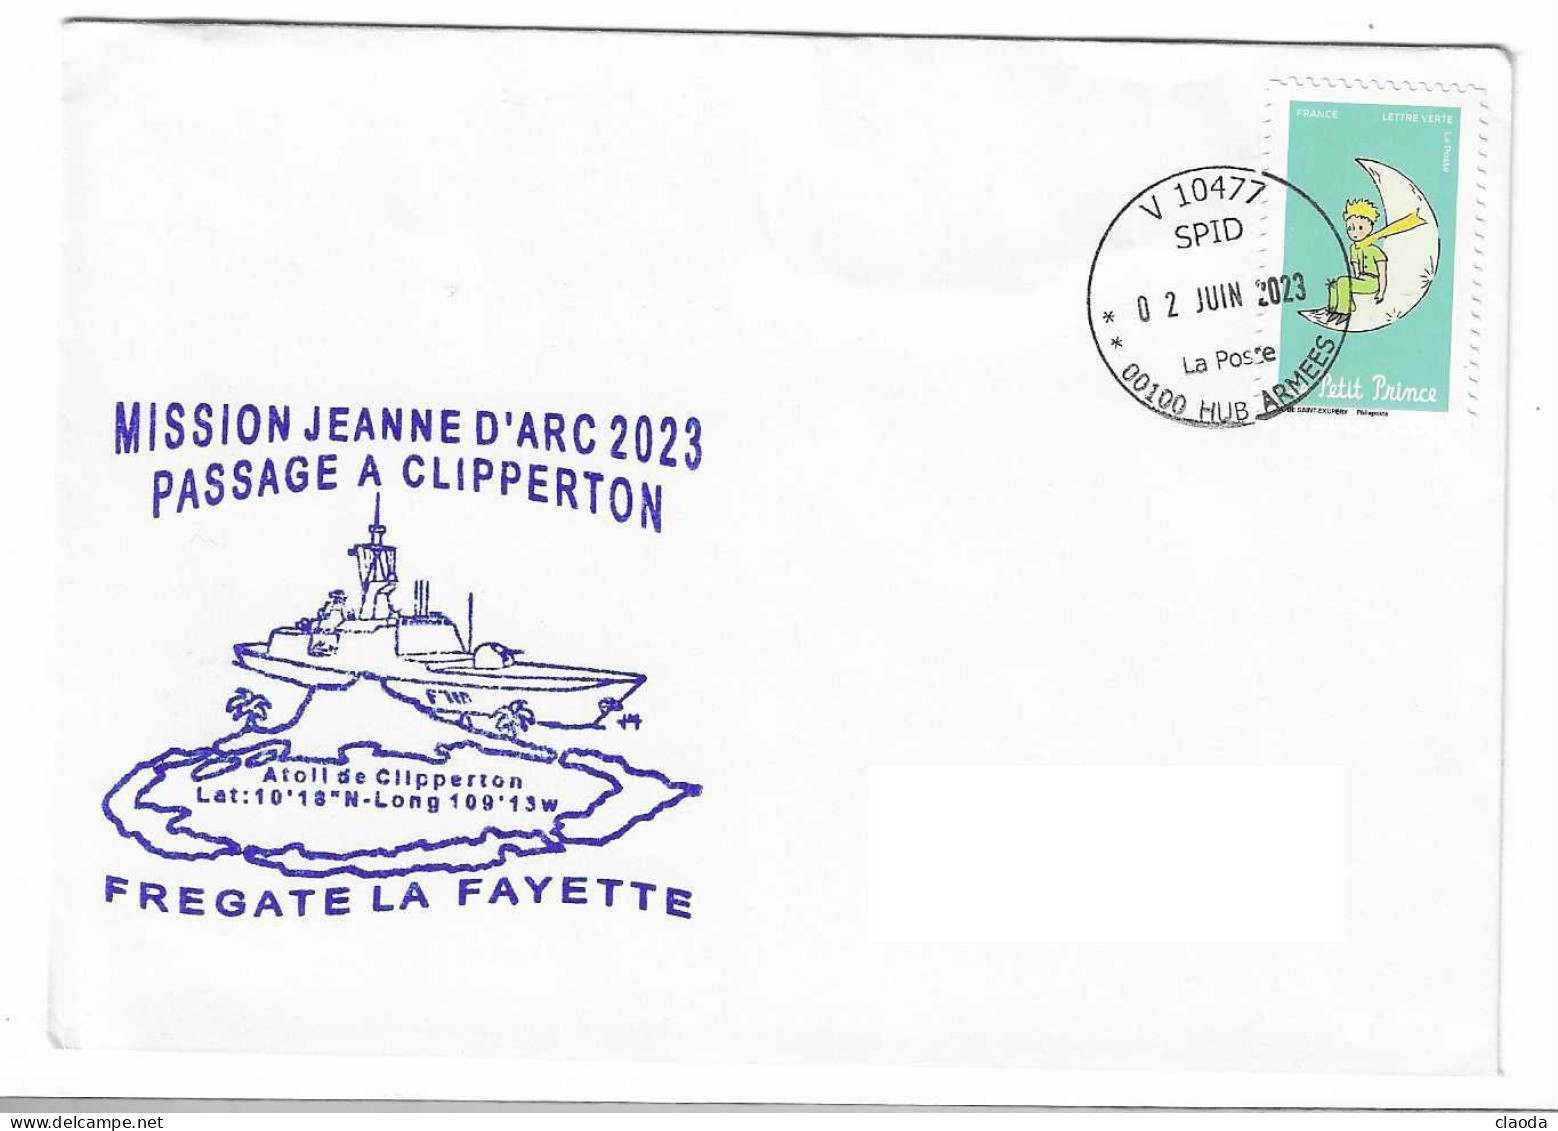 X333 - FREGATE LAFAYETTE - MISSION JDA 2023 - PASSAGE  A CLIPPERTON (SPID  V10477) - Naval Post